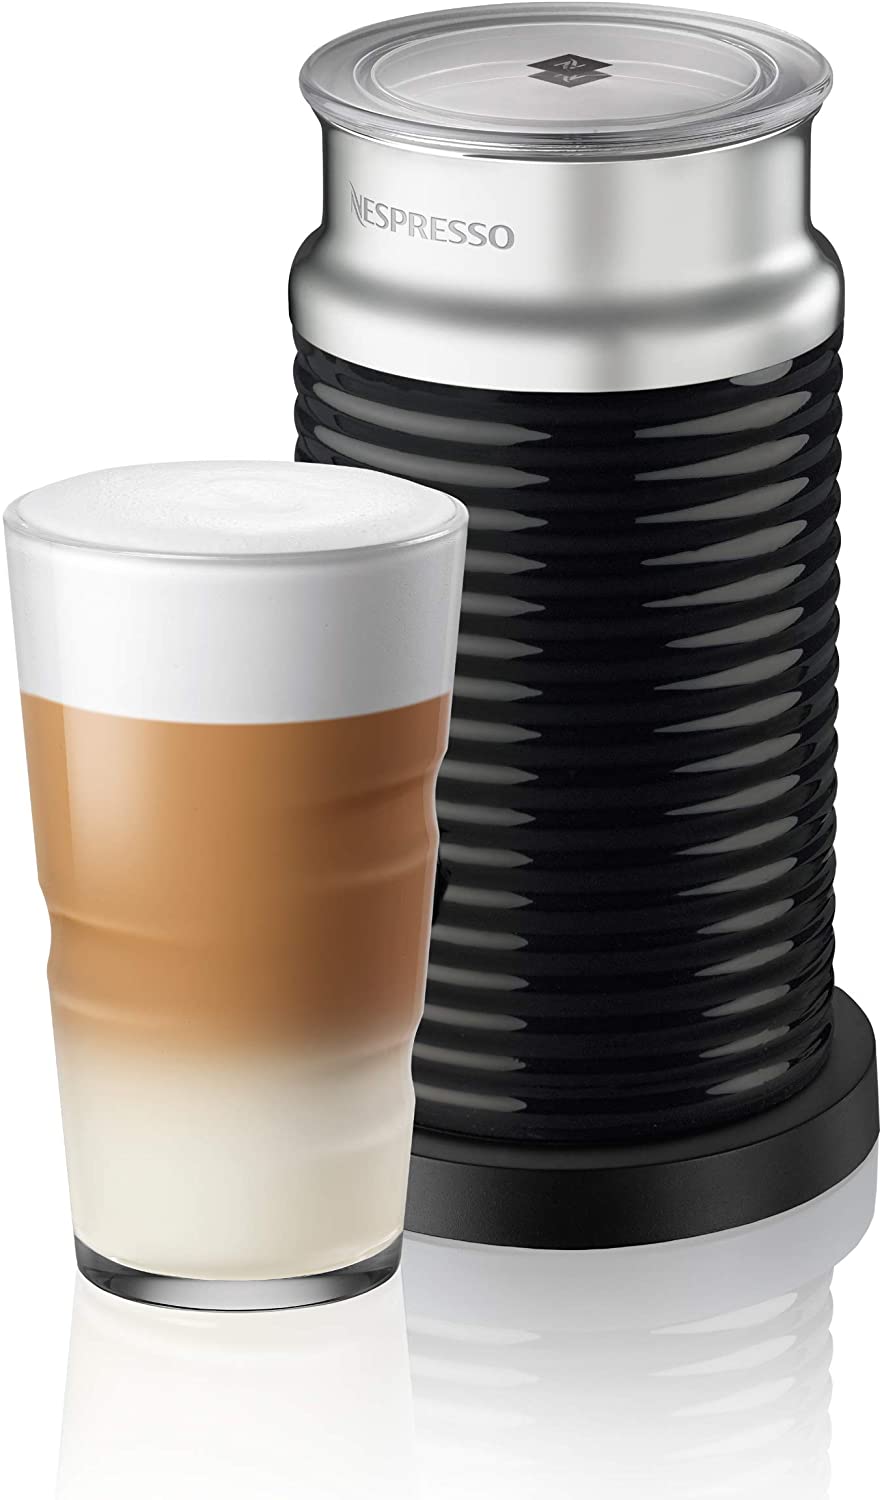 Nespresso Aeroccino 3 One-Touch Non-Stick Milk Frother (Black